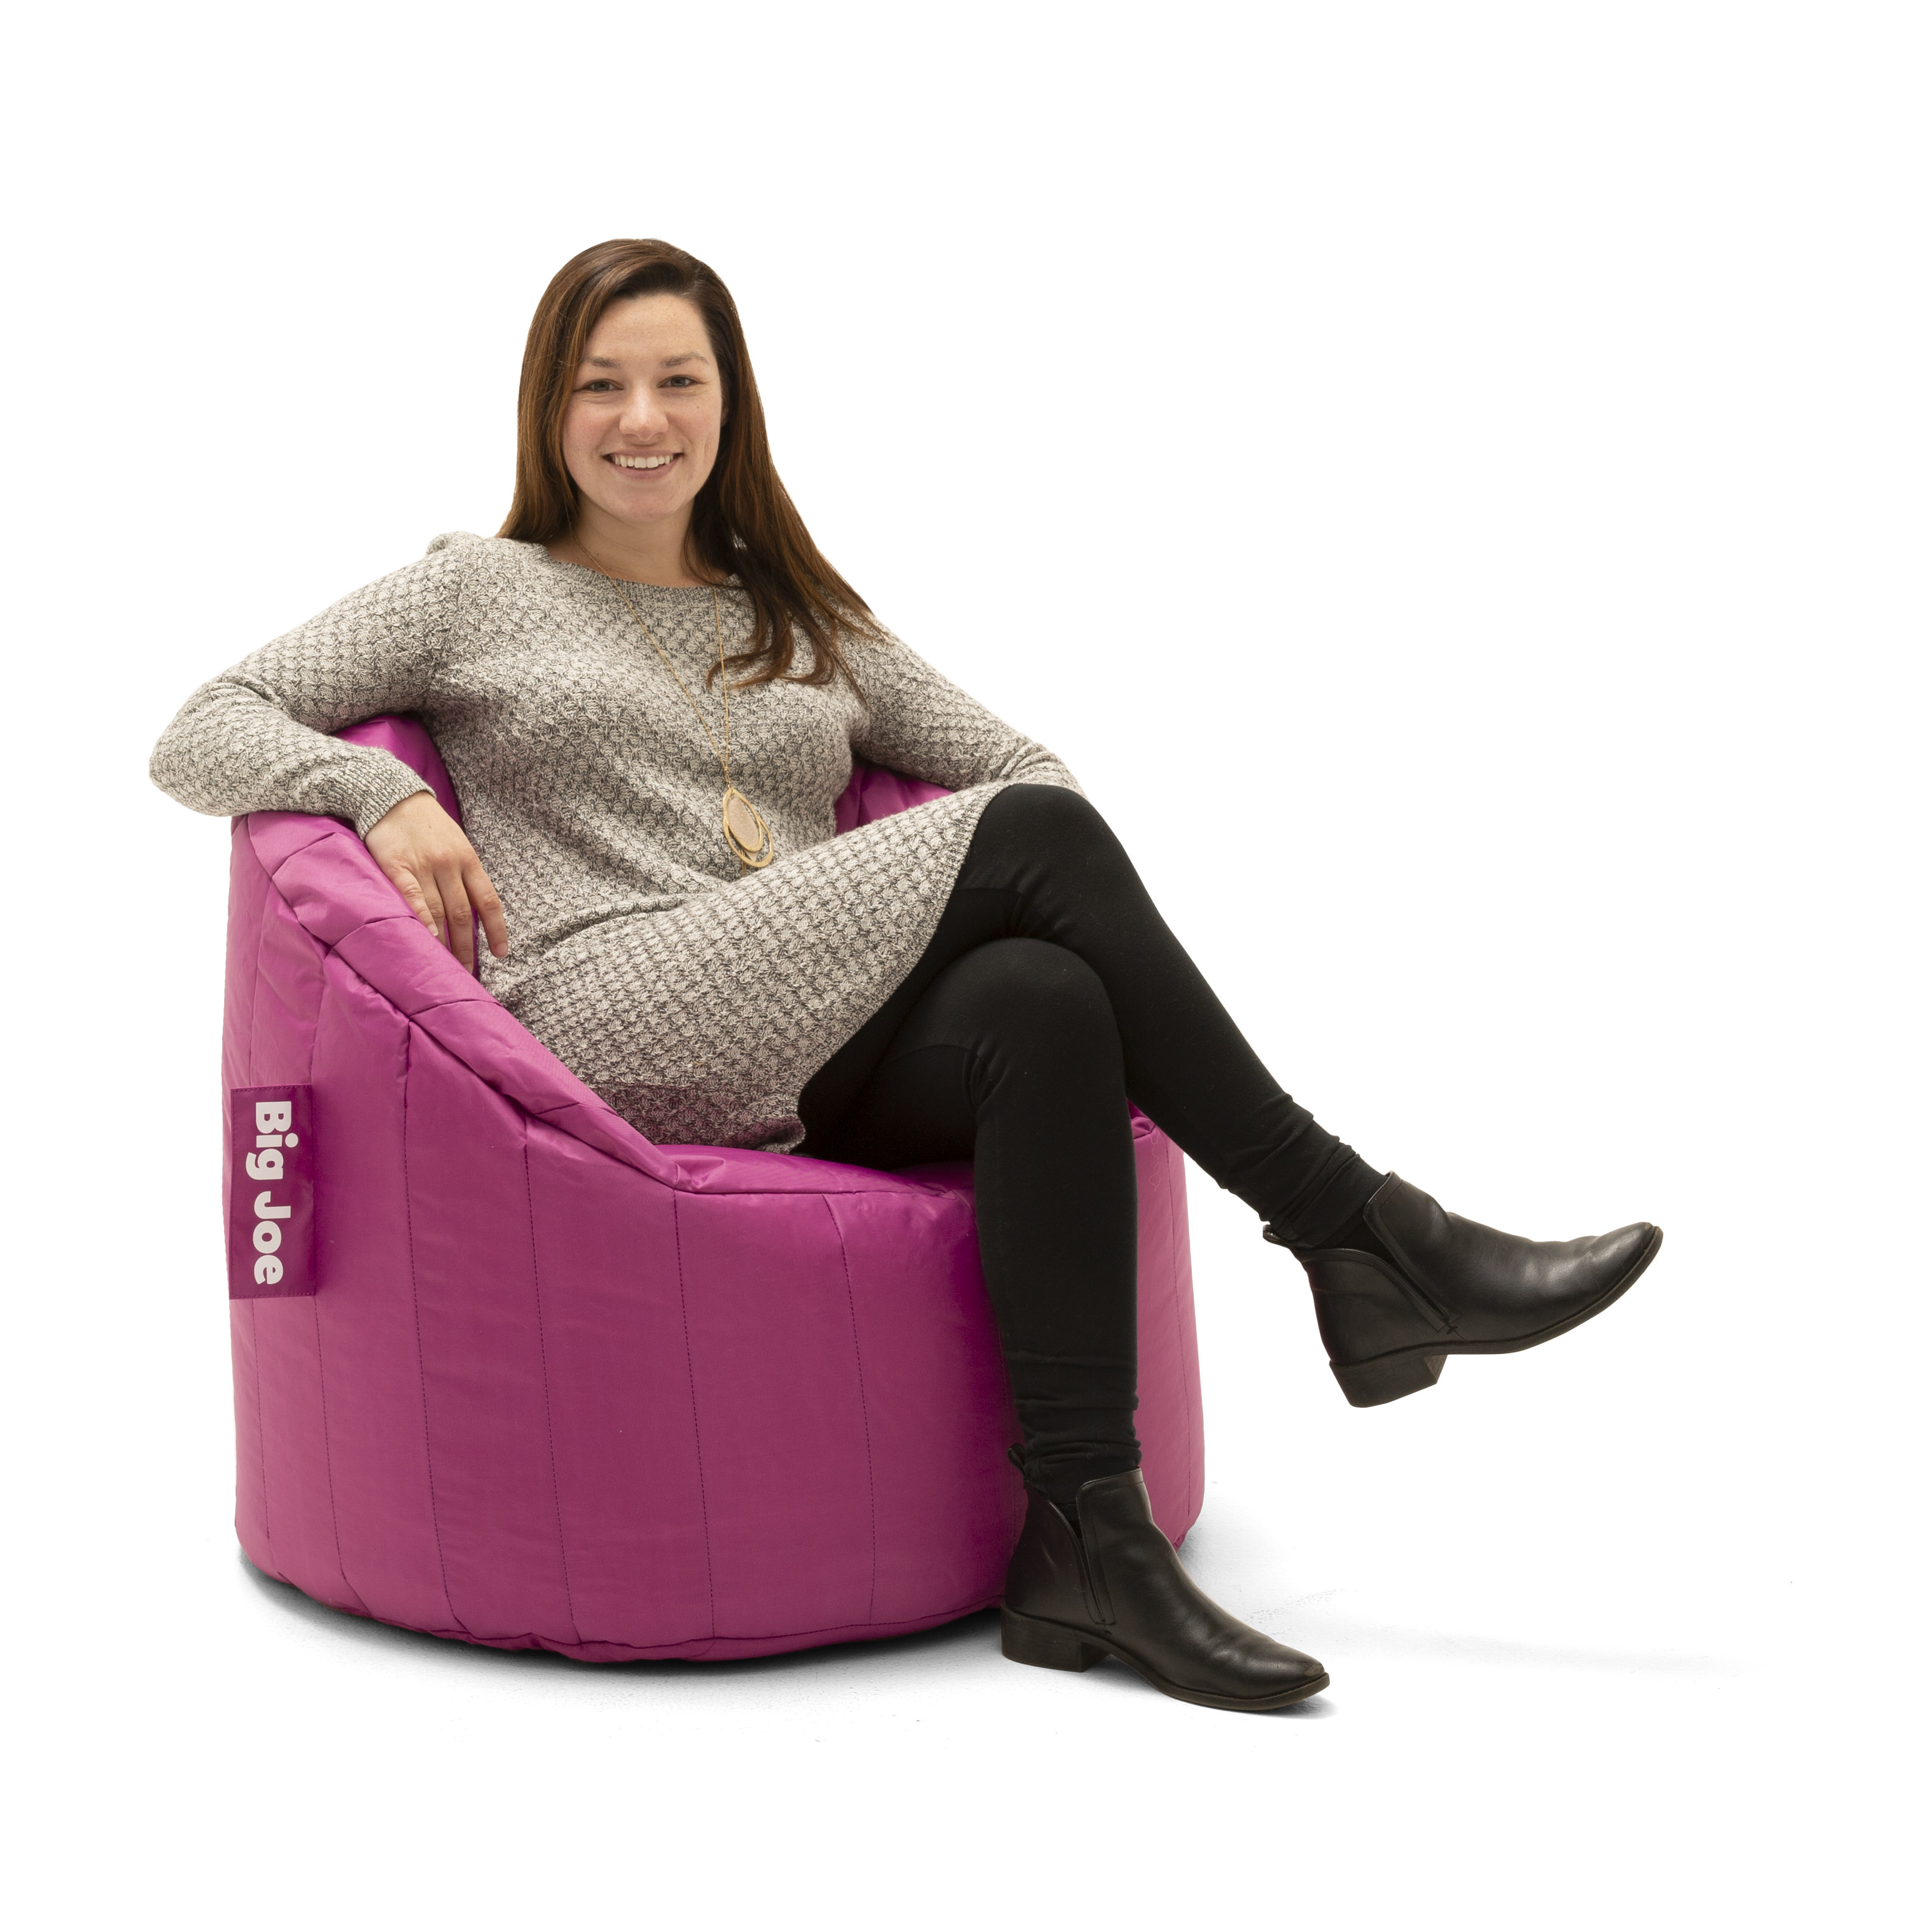 Big Joe Lumin Bean Bag Chair, Available in Multiple Colors - image 1 of 4